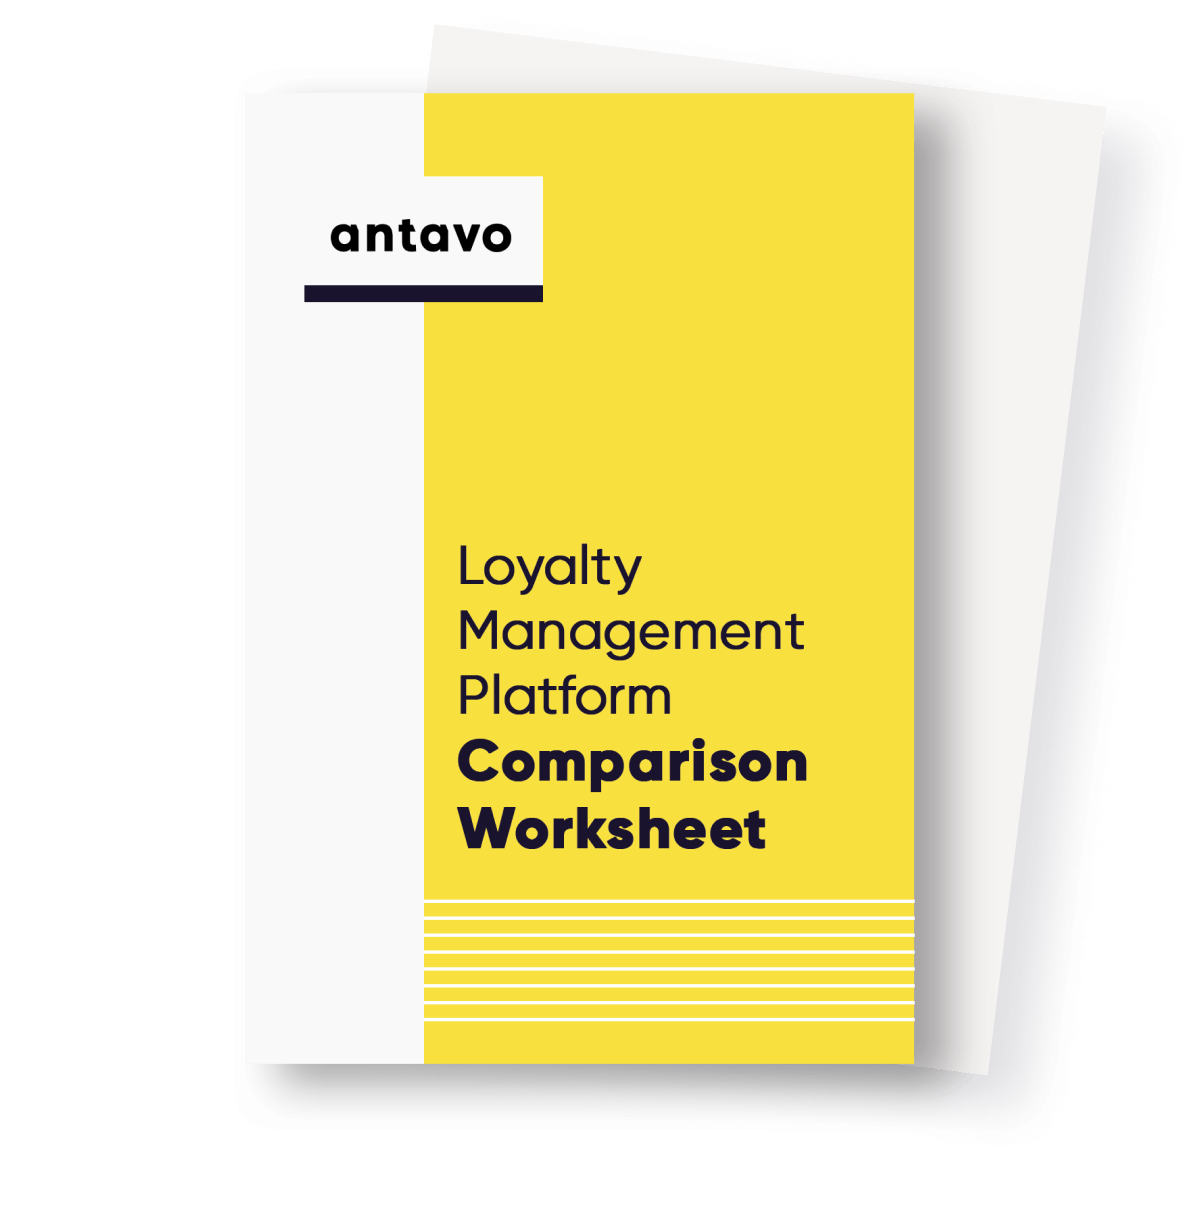 Antavo's Ebook: Loyalty Management Platform Comparison Worksheet